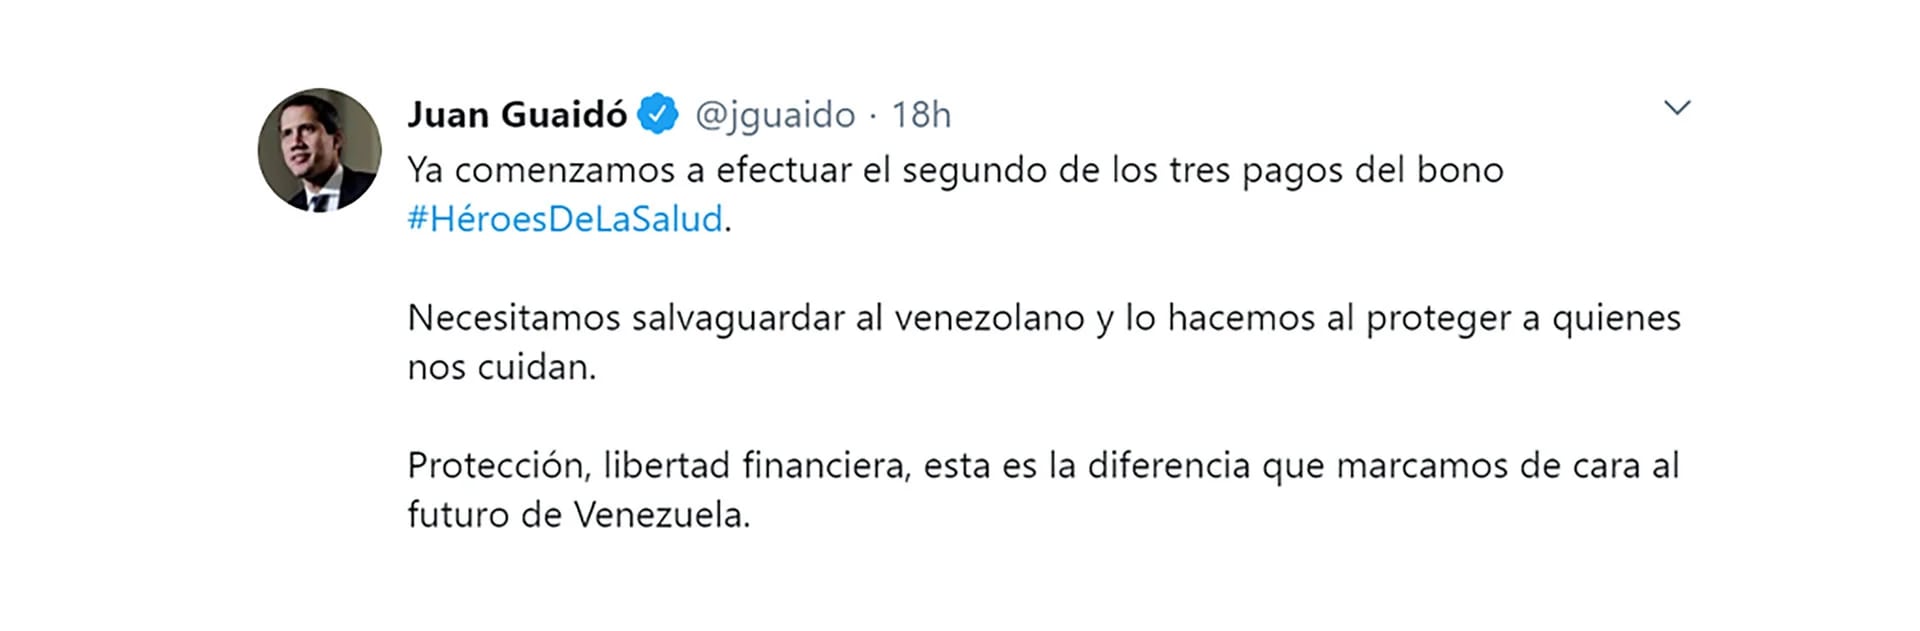 El anuncio de Guaidó en Twitter